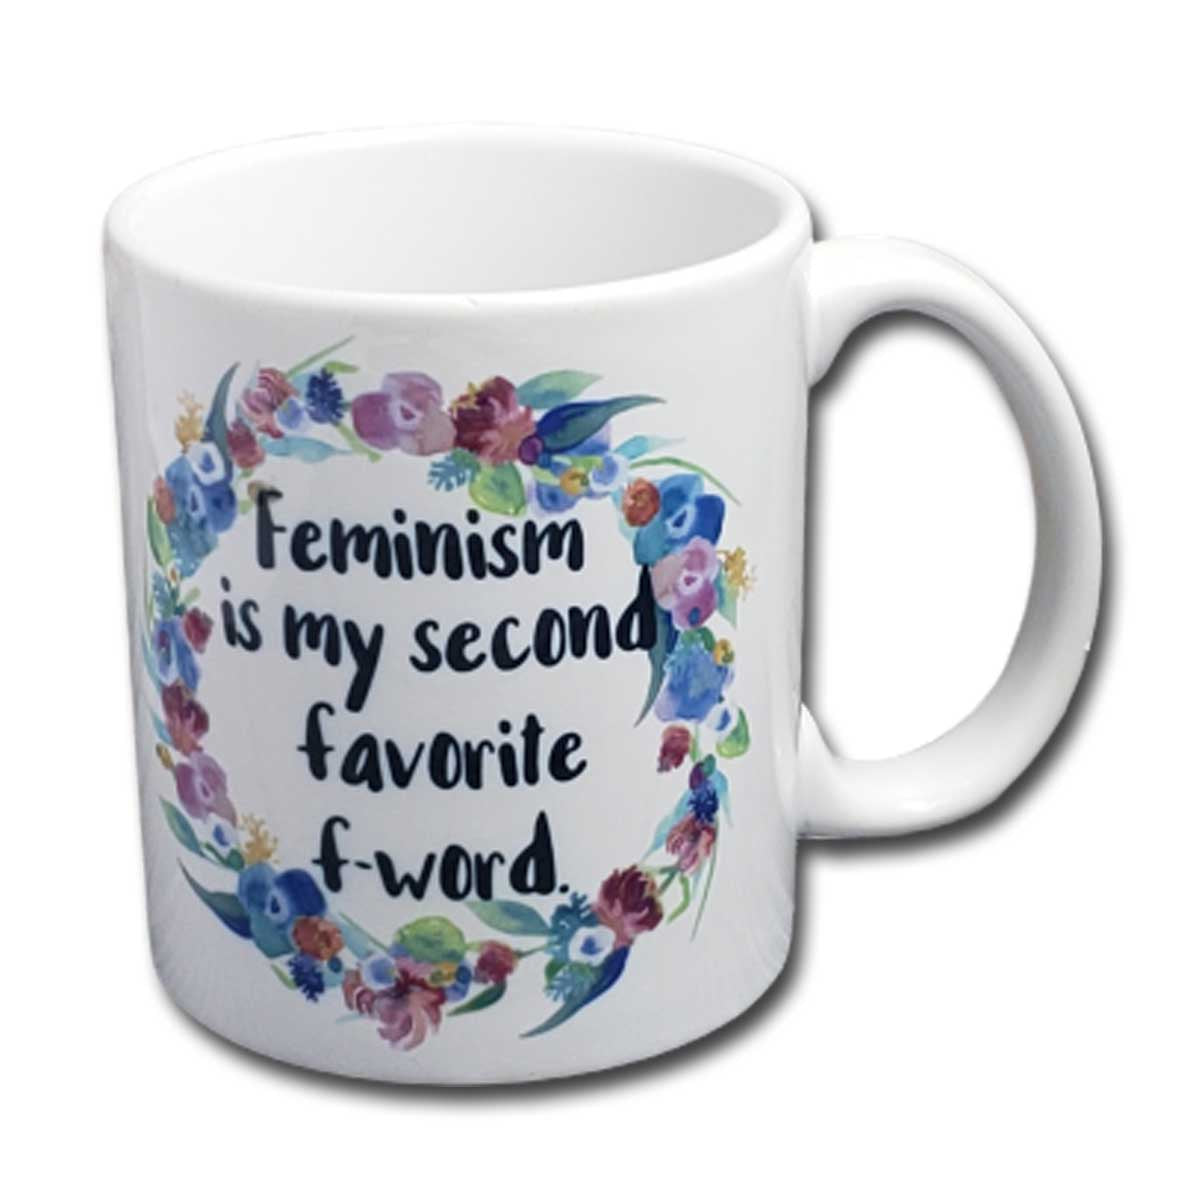 Feminism is My Second Favorite F-Word Mug